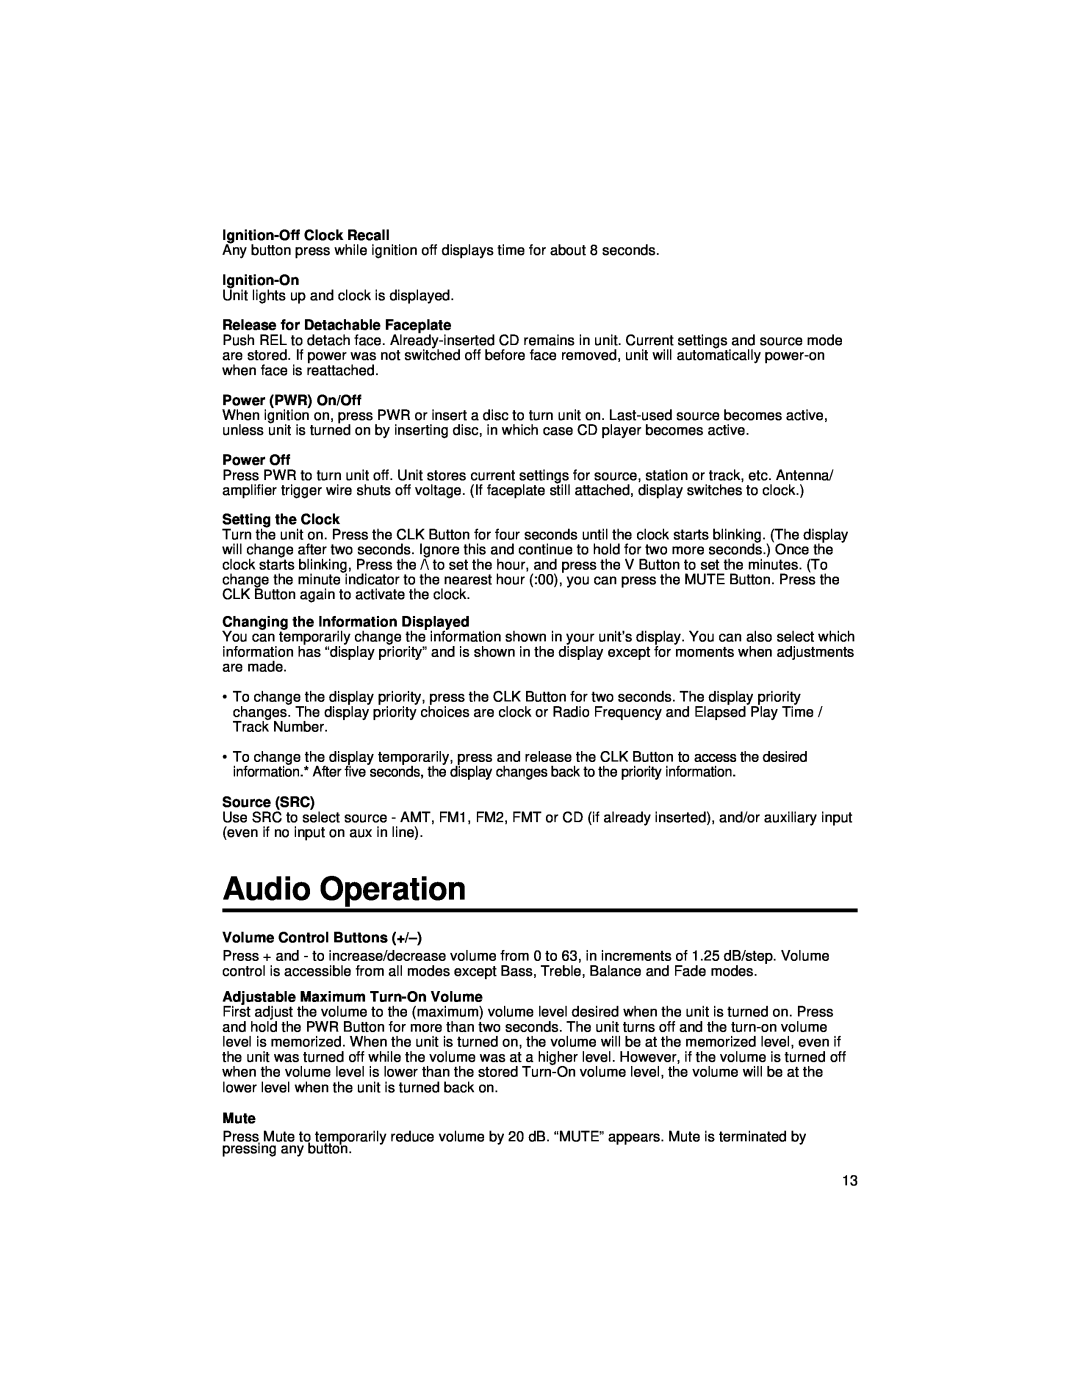 Blaupunkt CD127 manual Audio Operation 